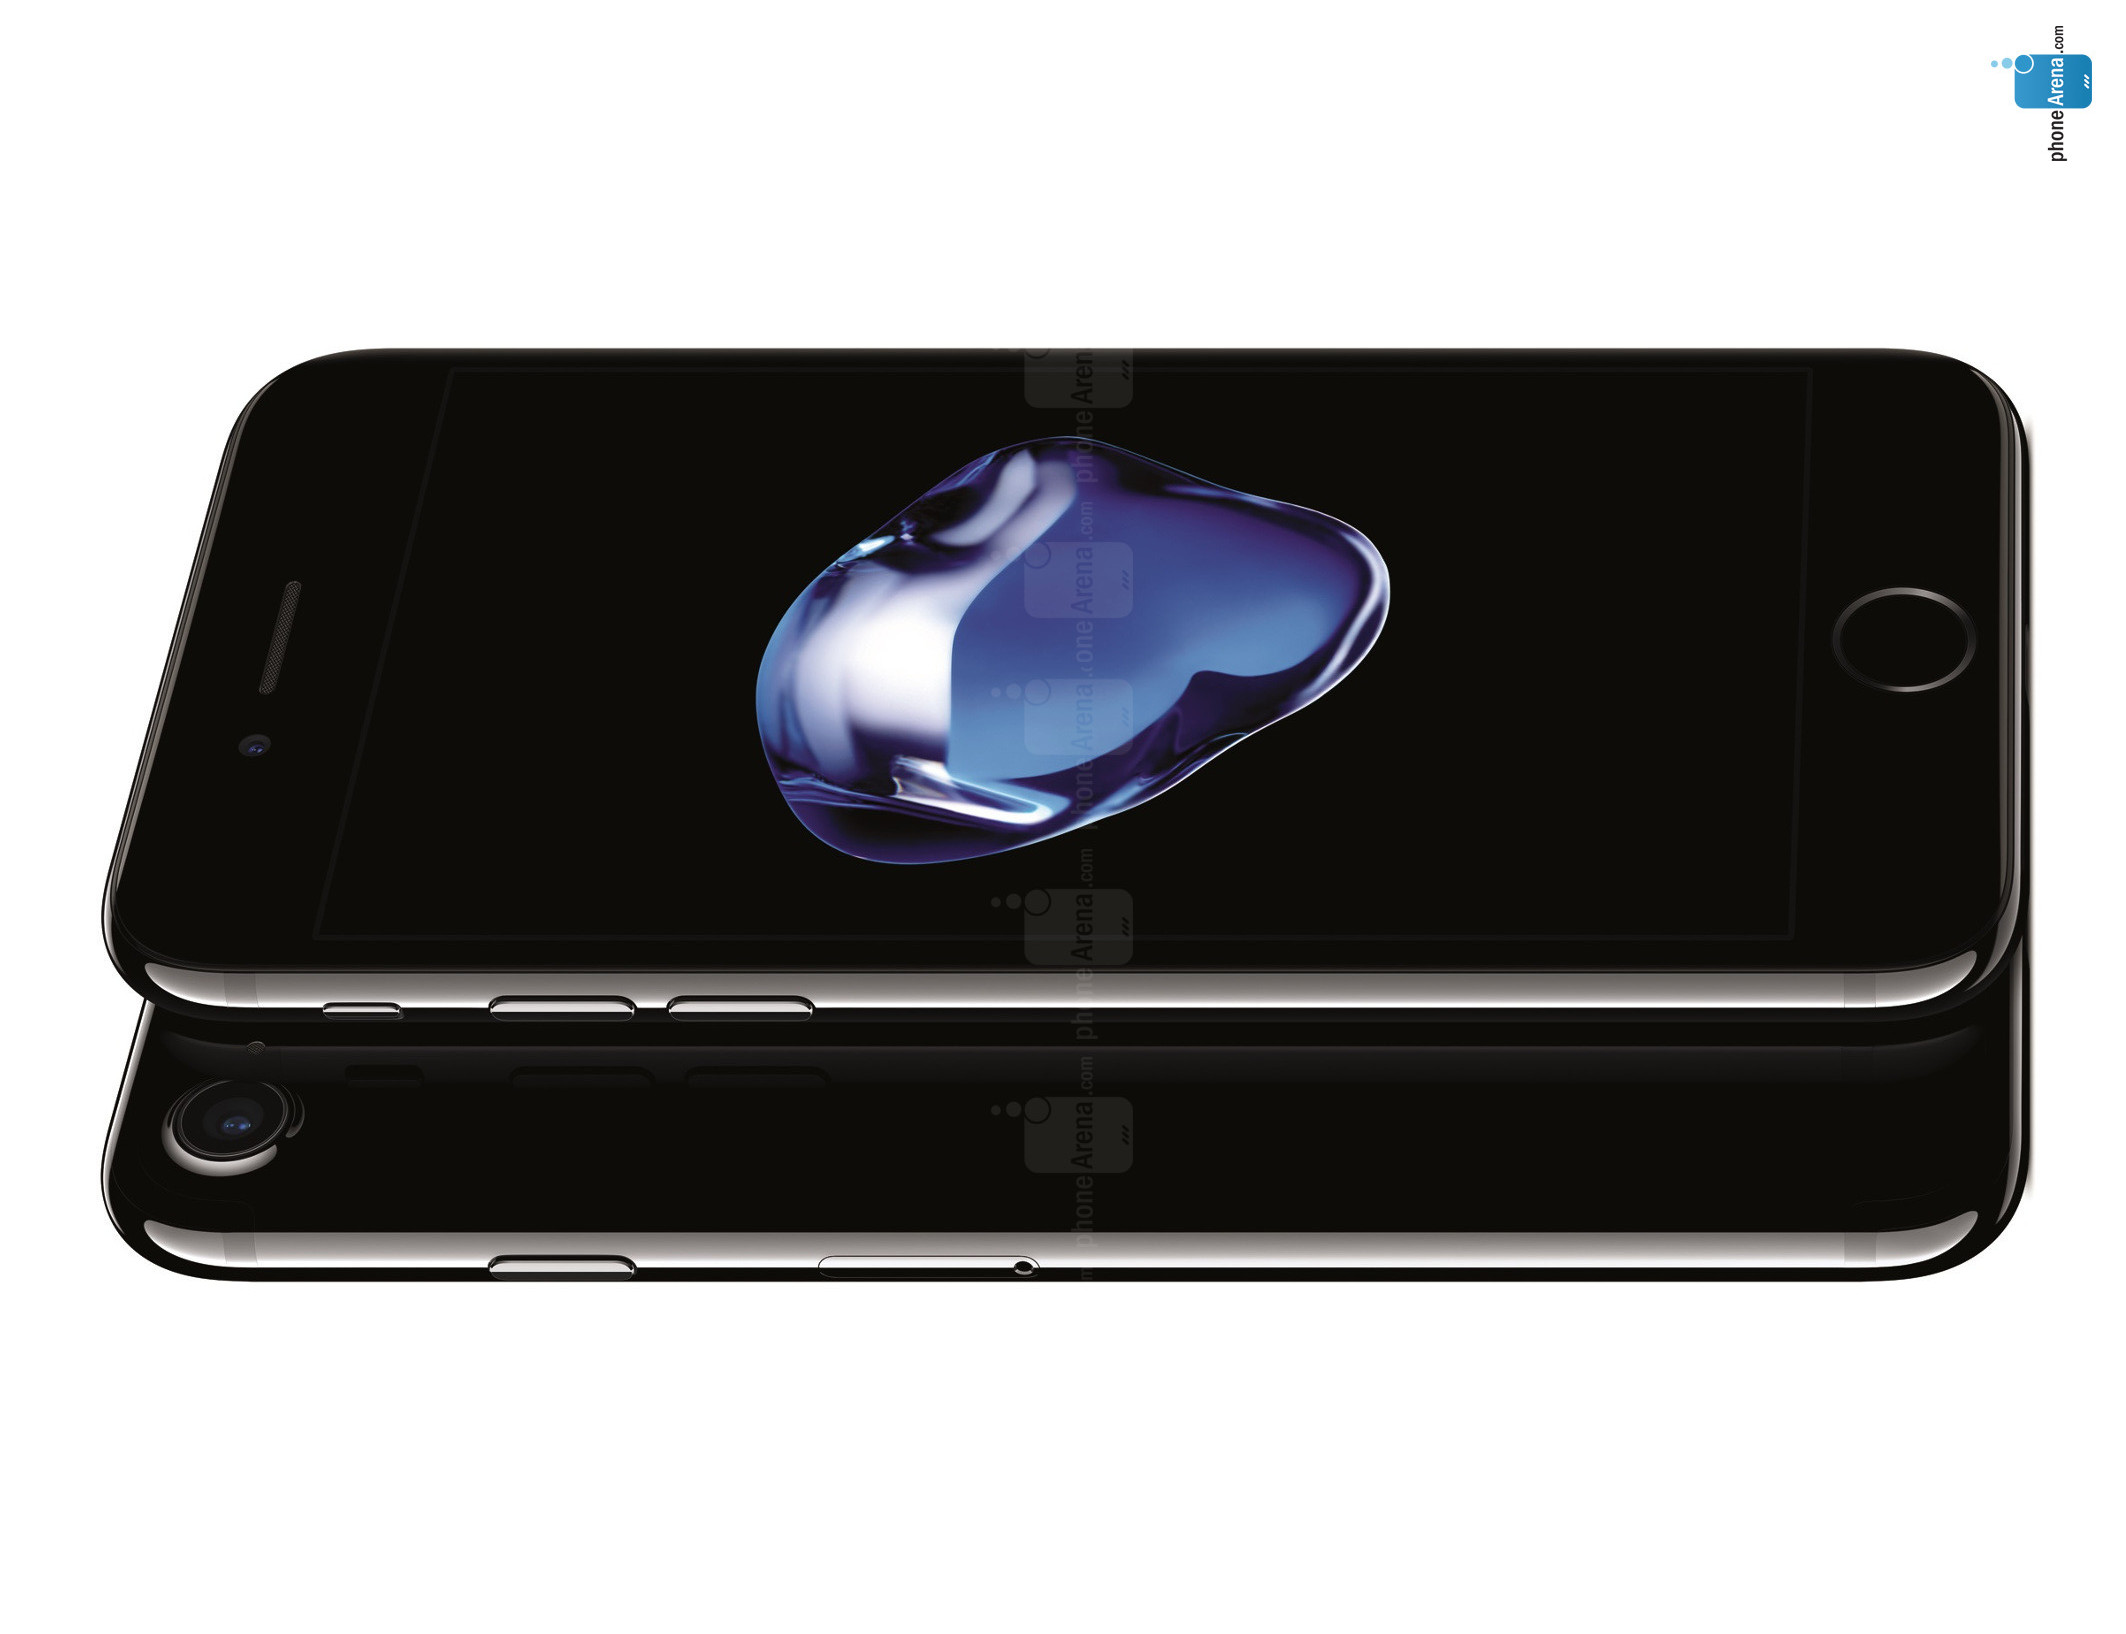 Apple iPhone 7 jet black